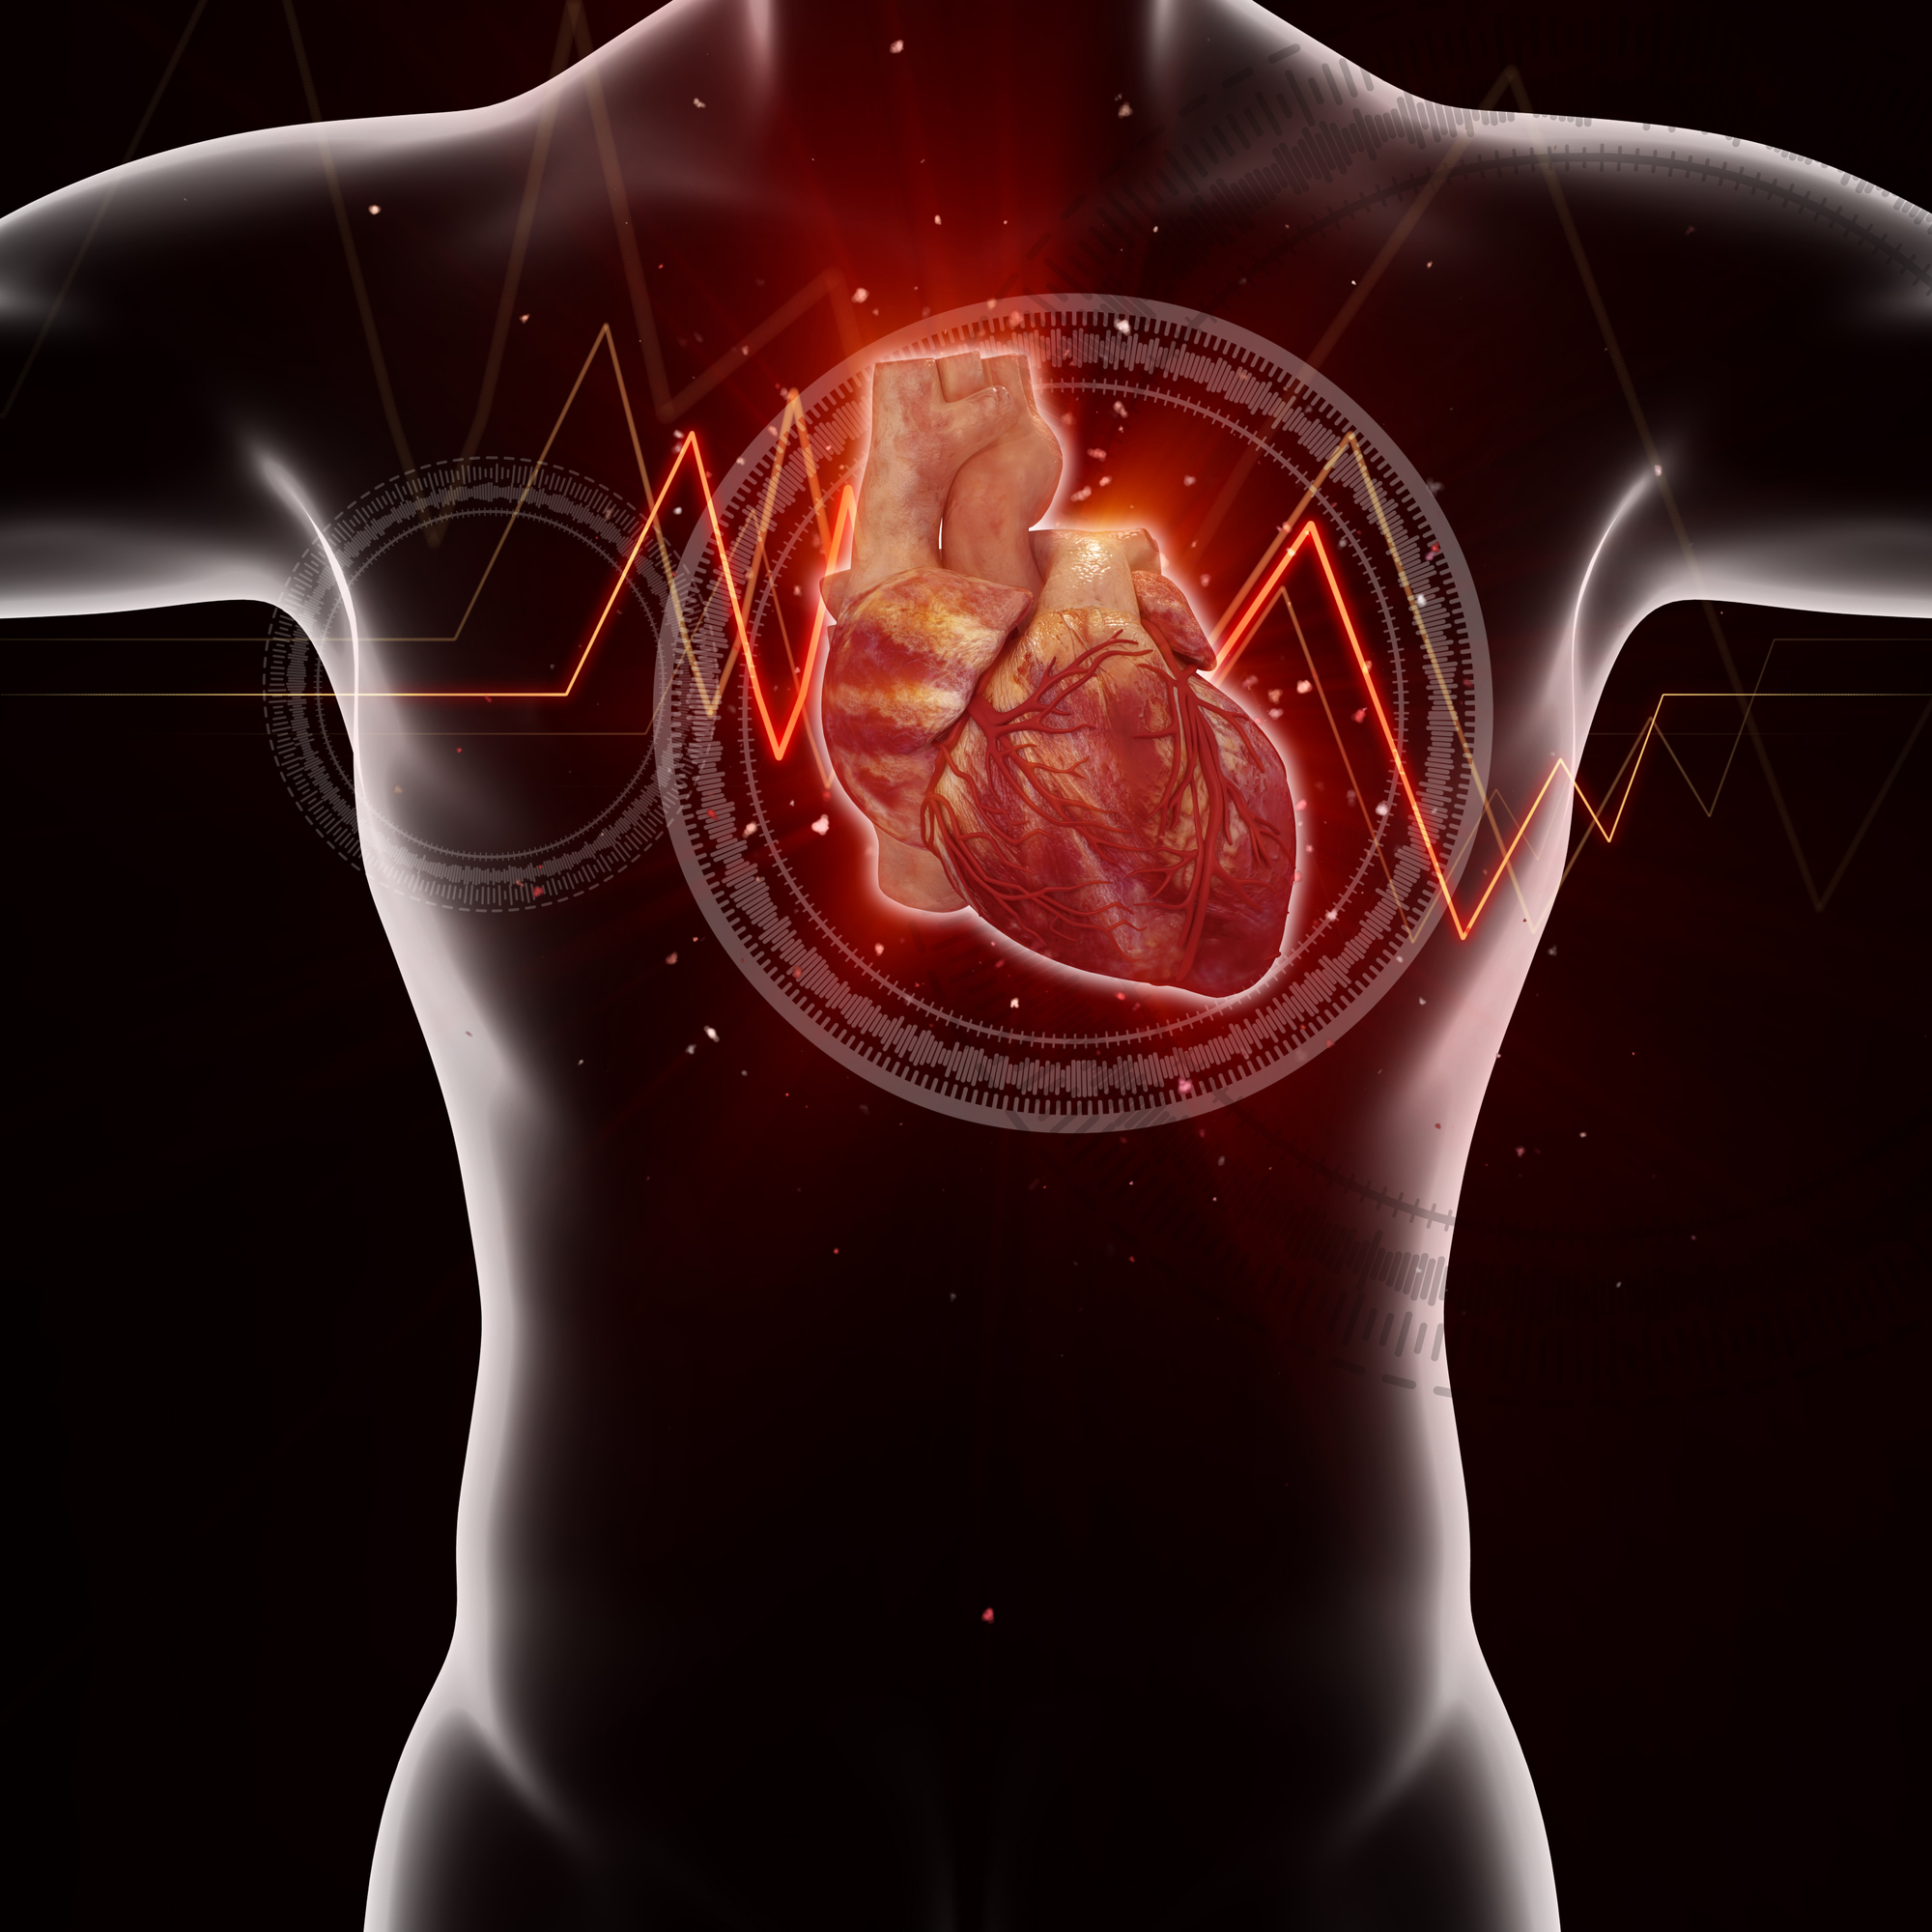 3D rendered medical illustration of a human heart